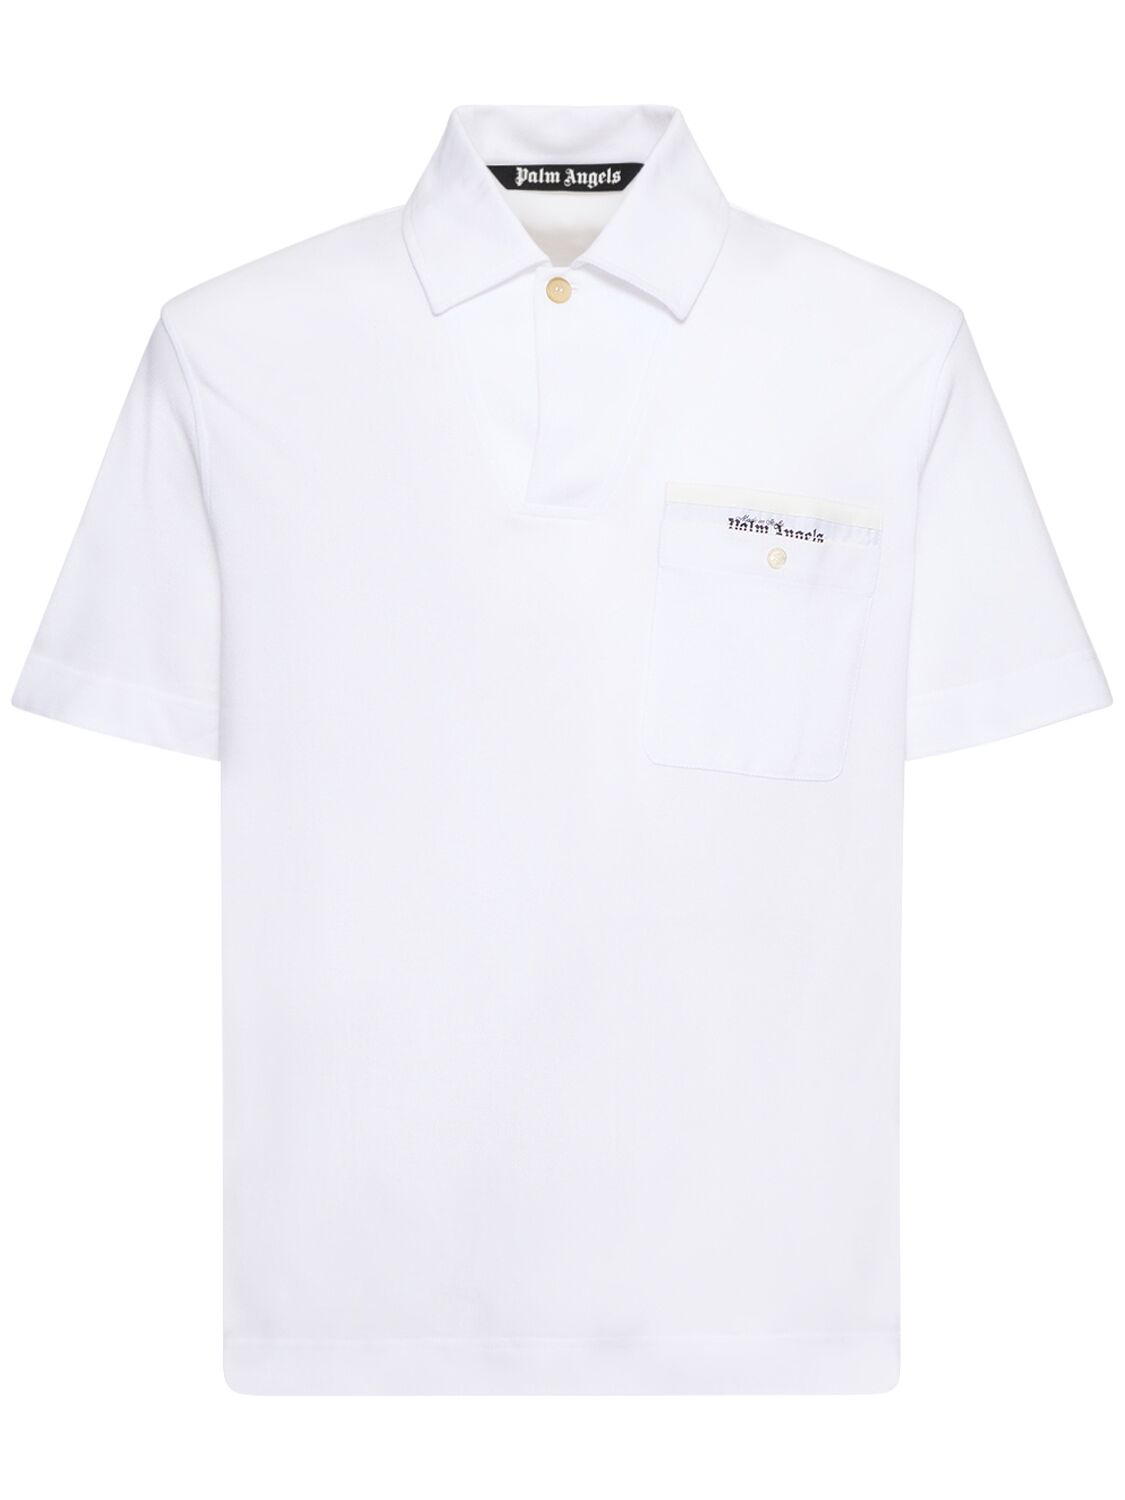 Tailored Cotton Polo Shirt - PALM ANGELS - Modalova